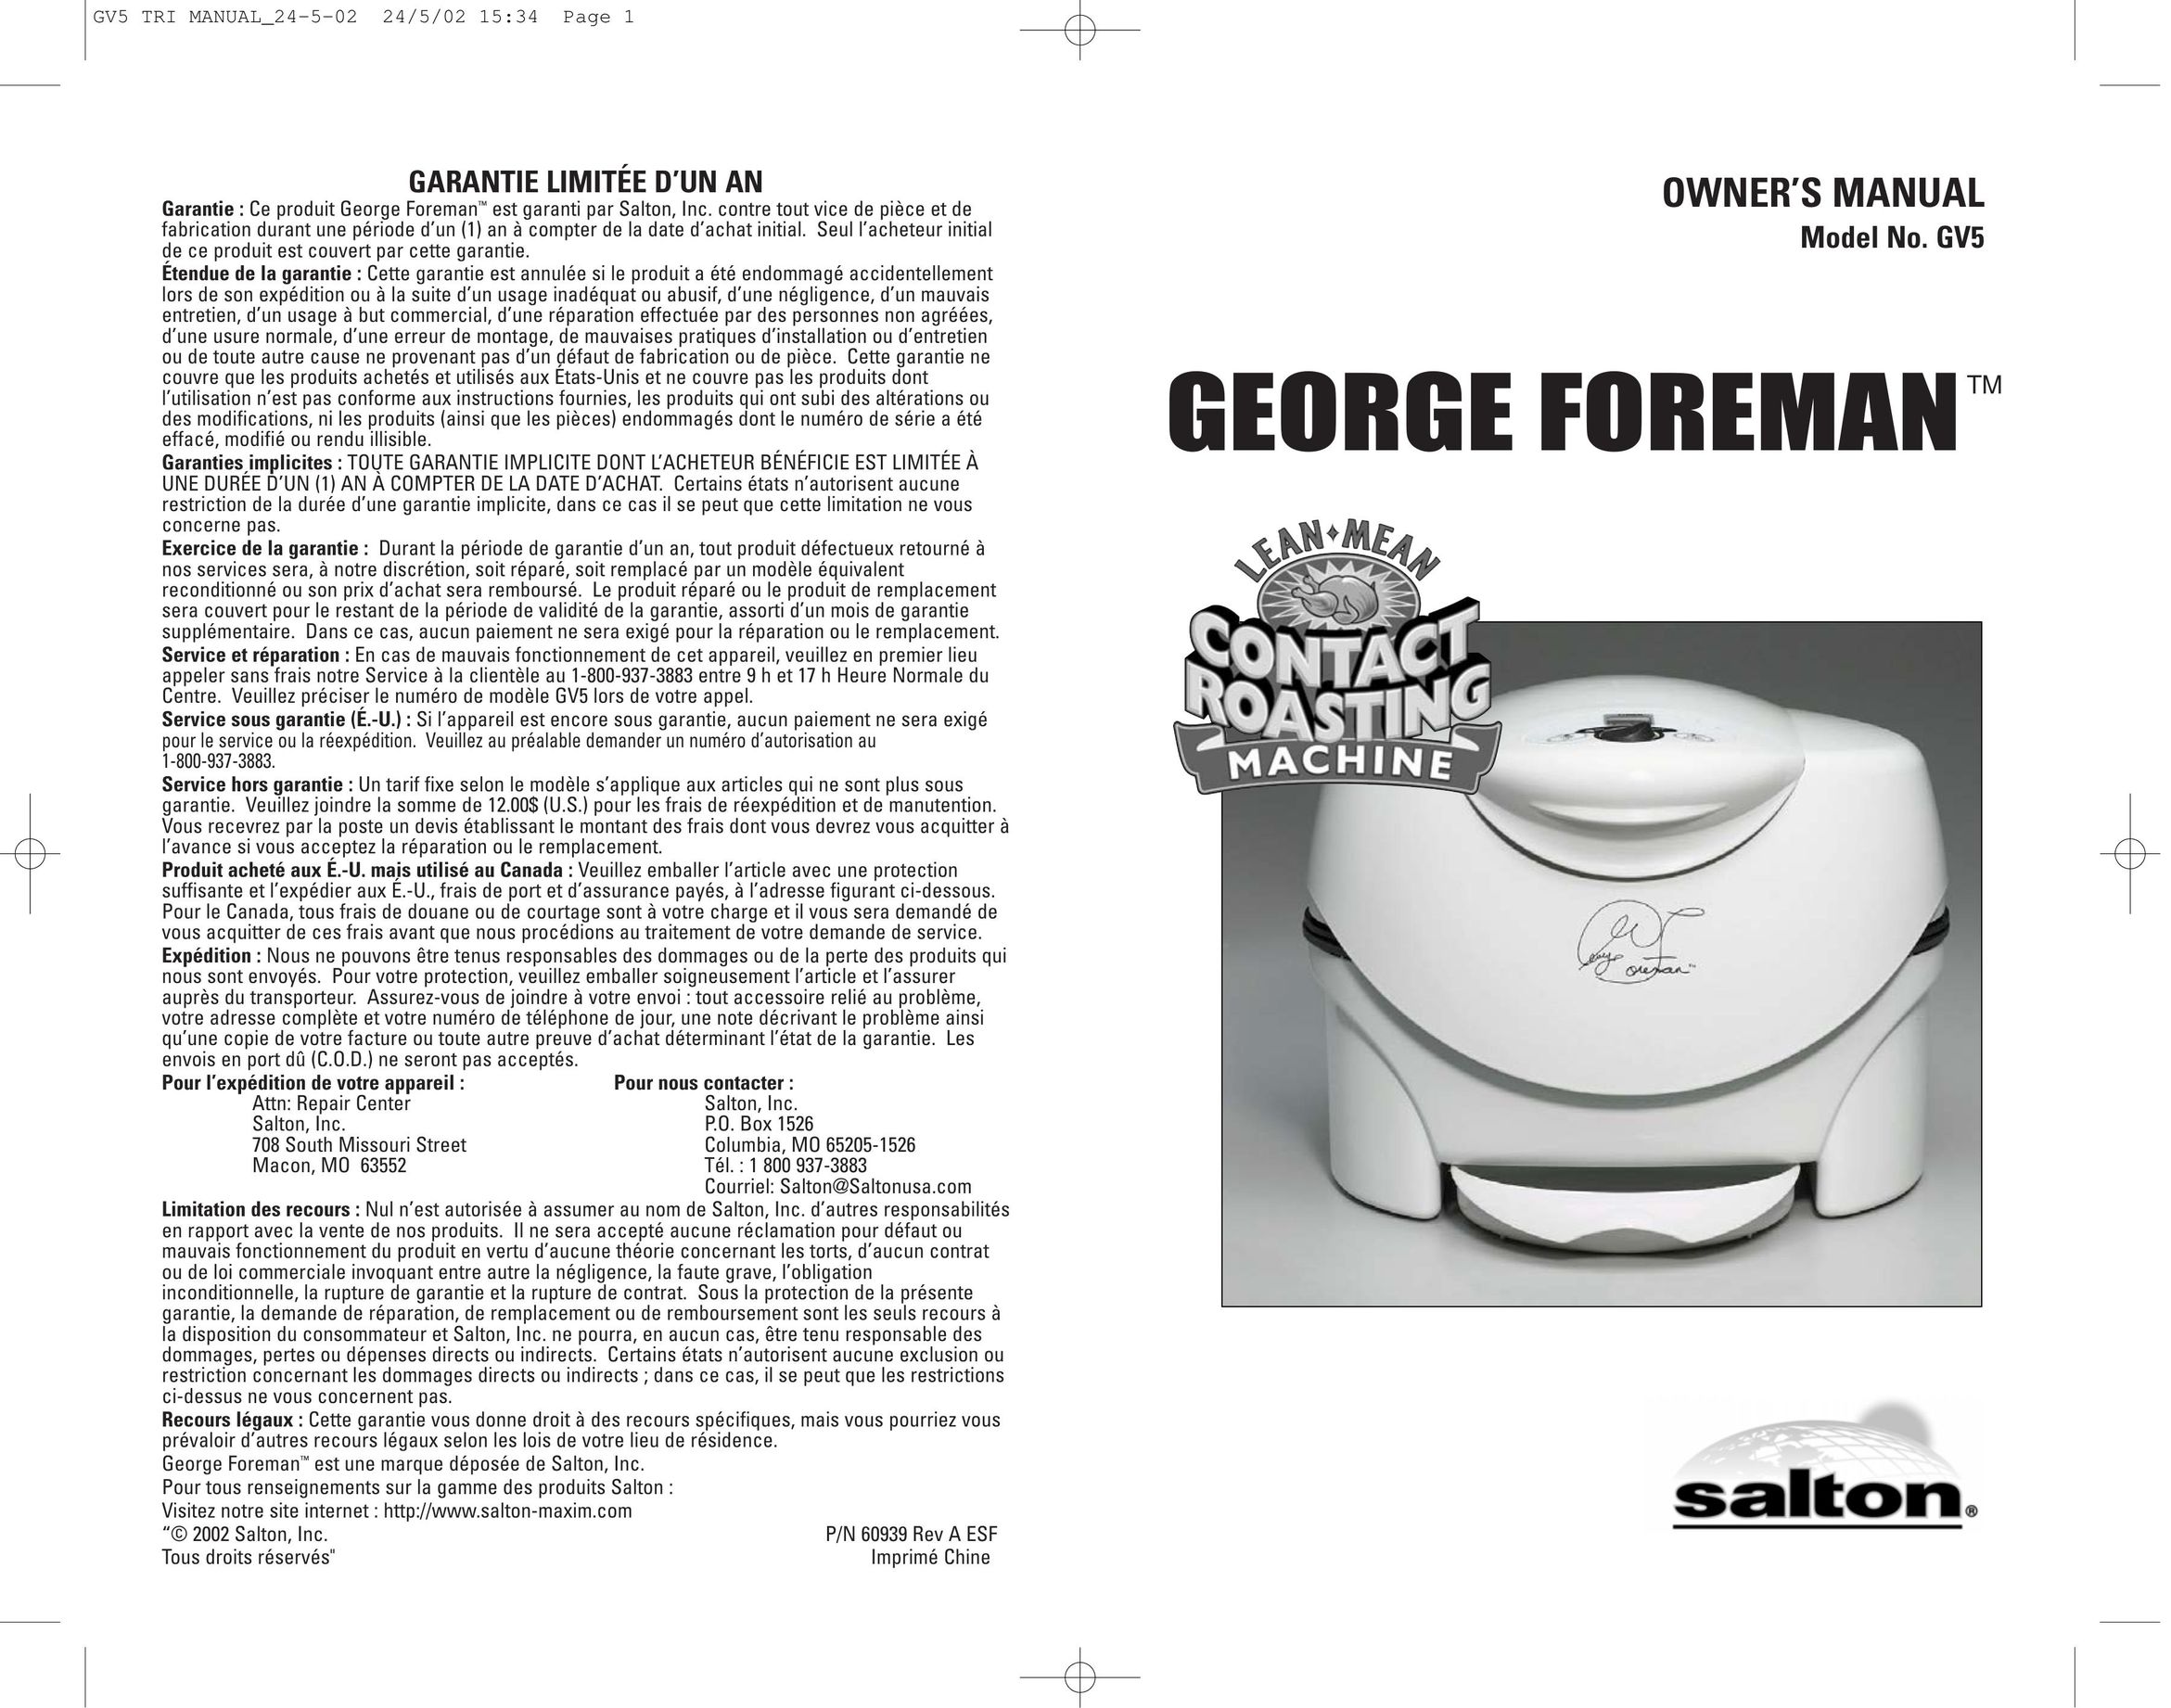 George Foreman GV5 Oven User Manual